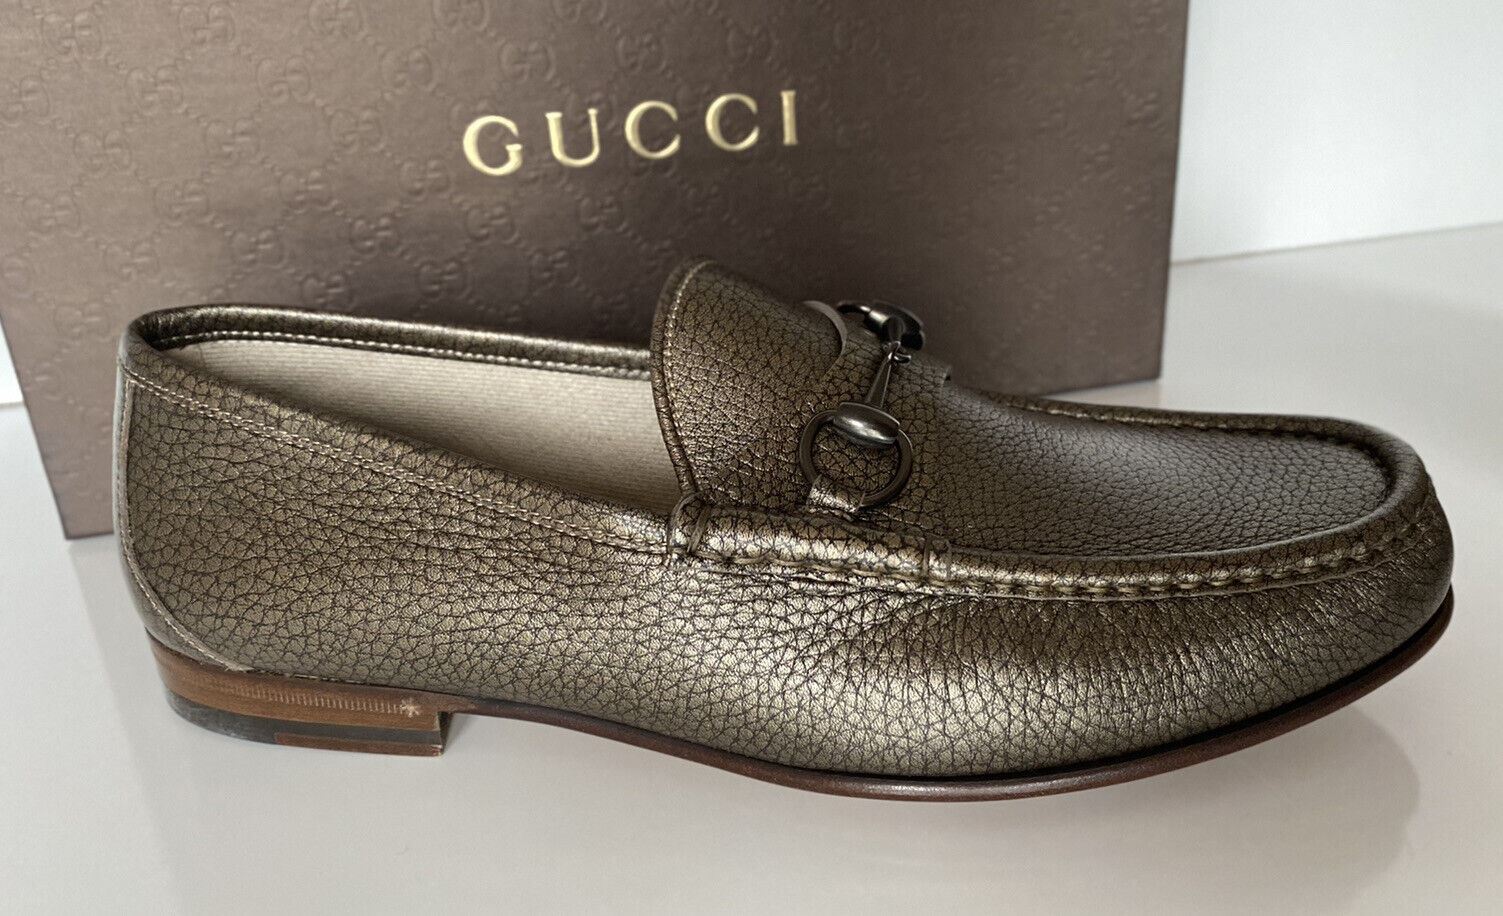 NIB Gucci Men's Leather Metallic Gold Dress Shoes 11 US (Gucci 10) 357182 Italy